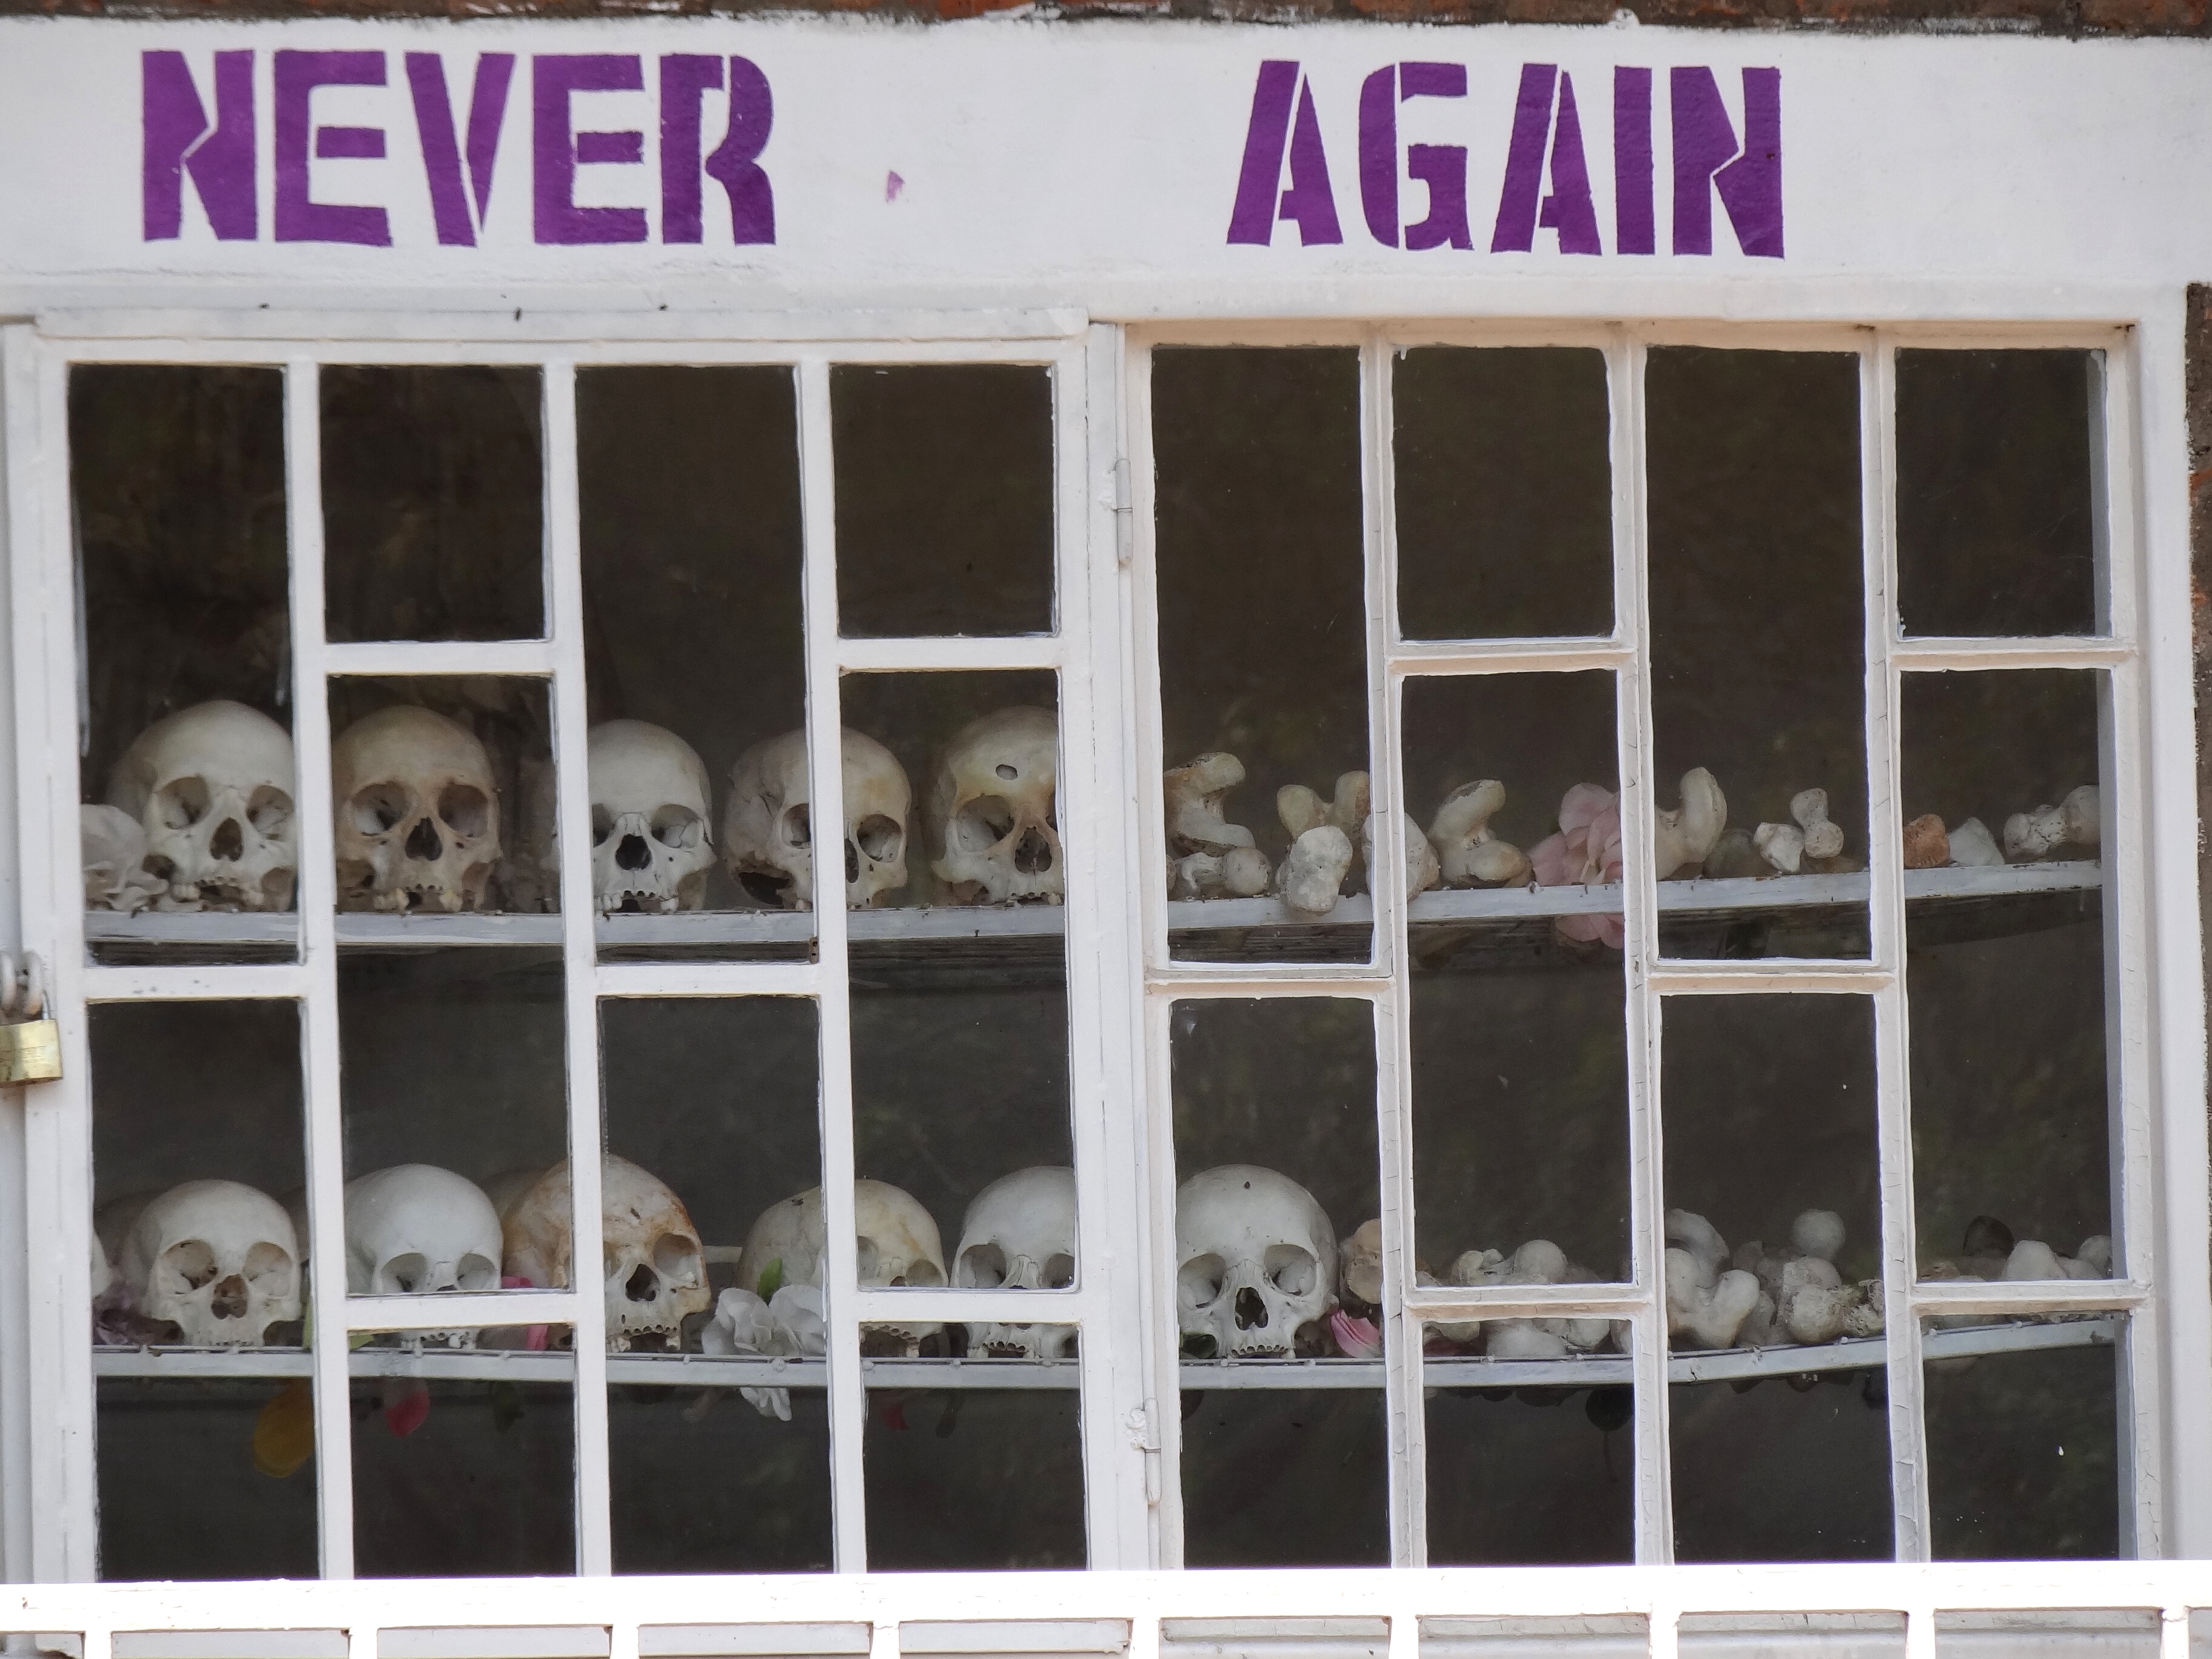 Never_Again_-_With_Display_of_Skulls_of_Victims_-_Courtyard_of_Genocide_Memorial_Church_-_Karongi-Kibuye_-_Western_Rwanda_-_02